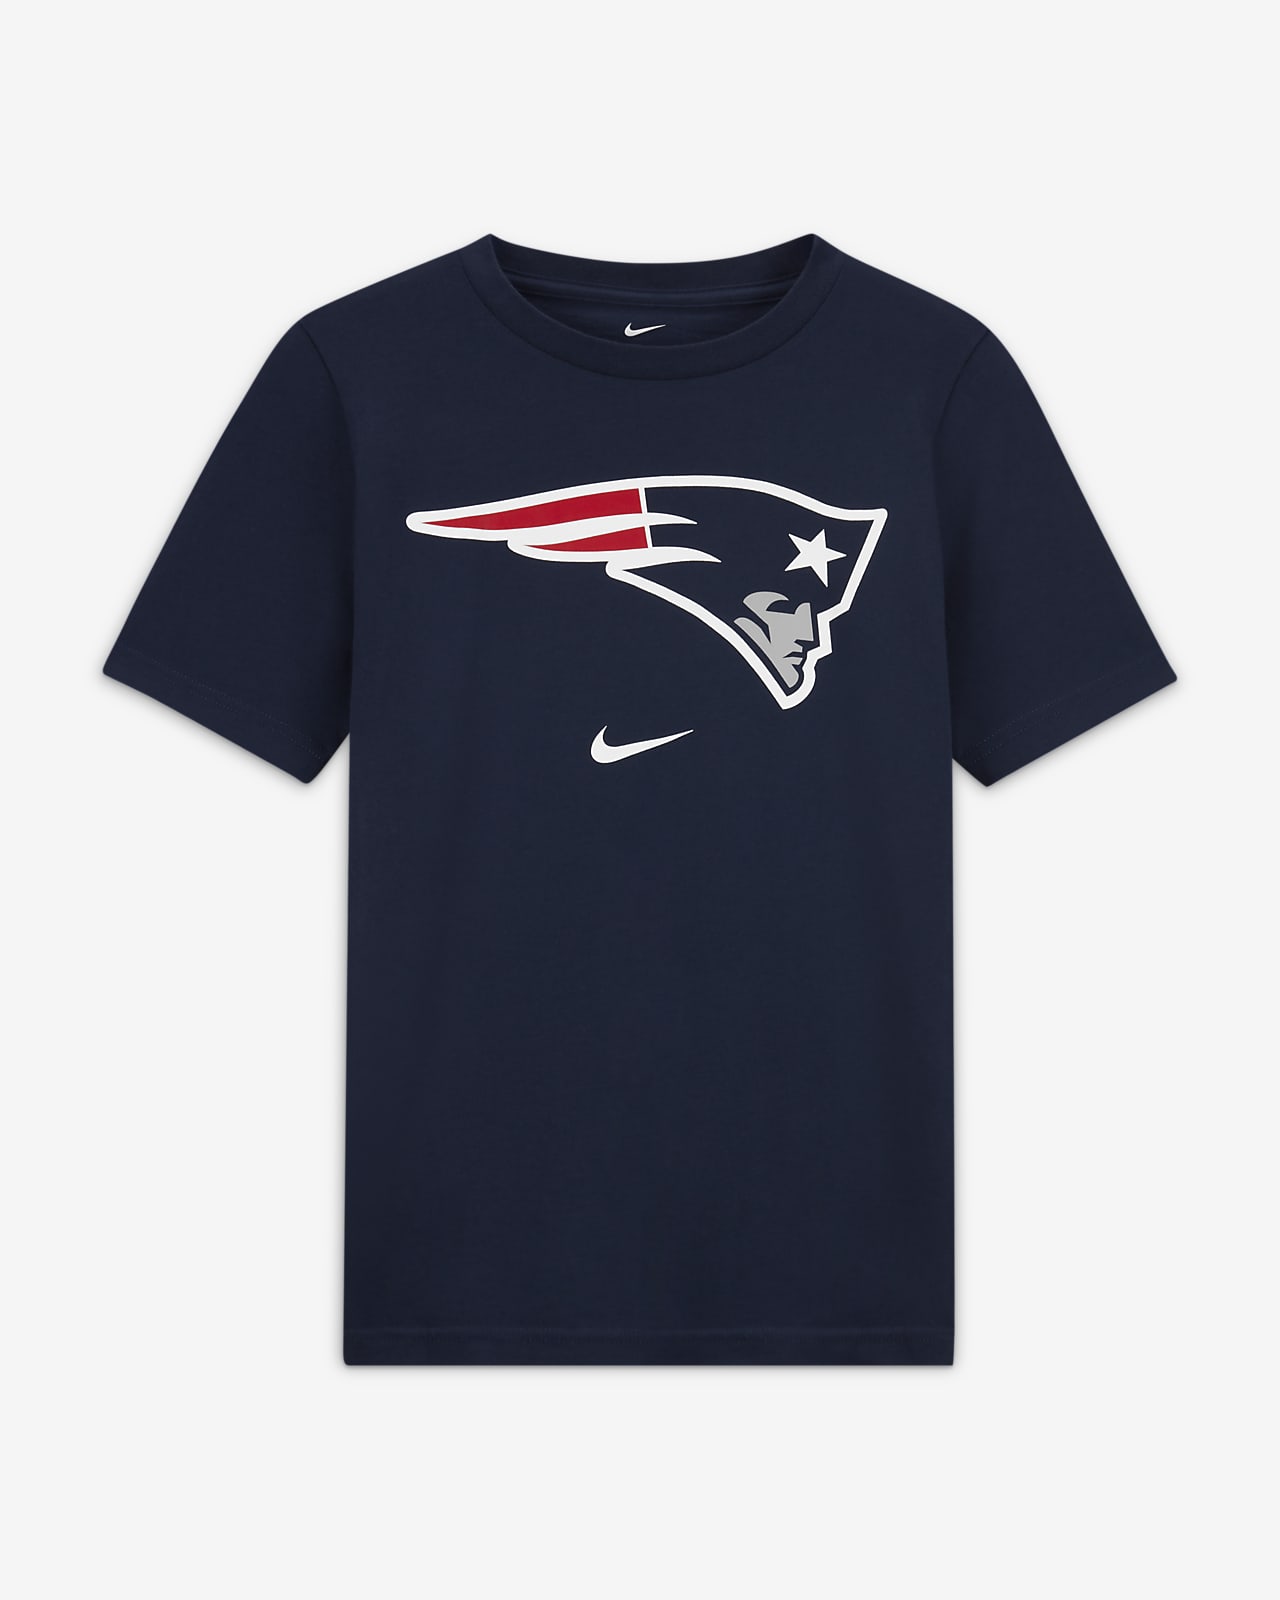 Nike (NFL New England Patriots) Camiseta - Niño/a